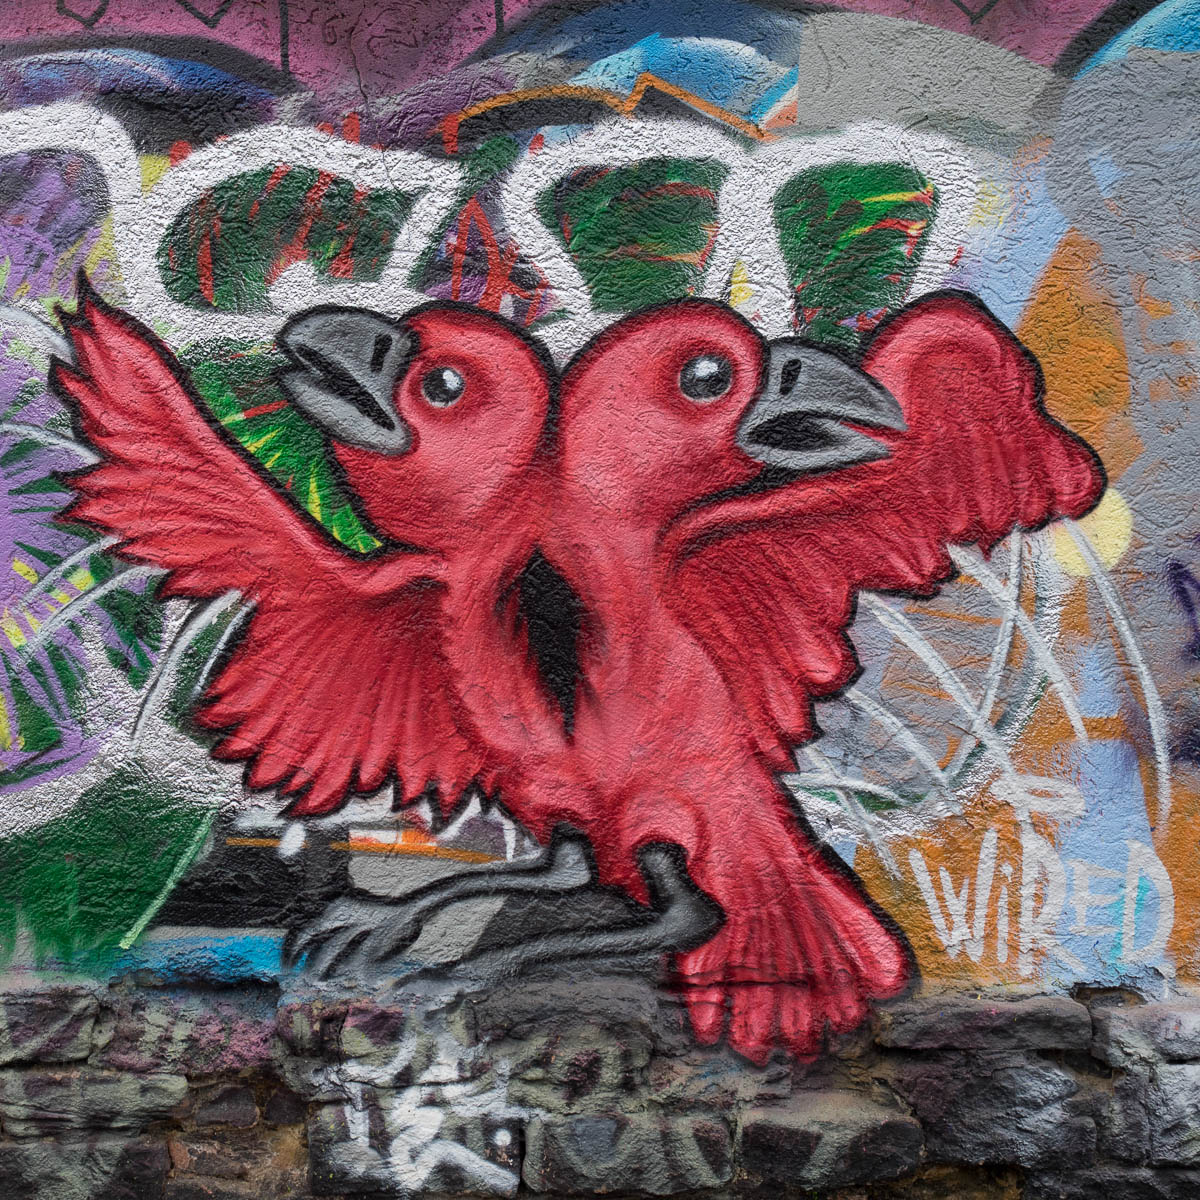 graffiti-gelnhausen-dosenkunst-de